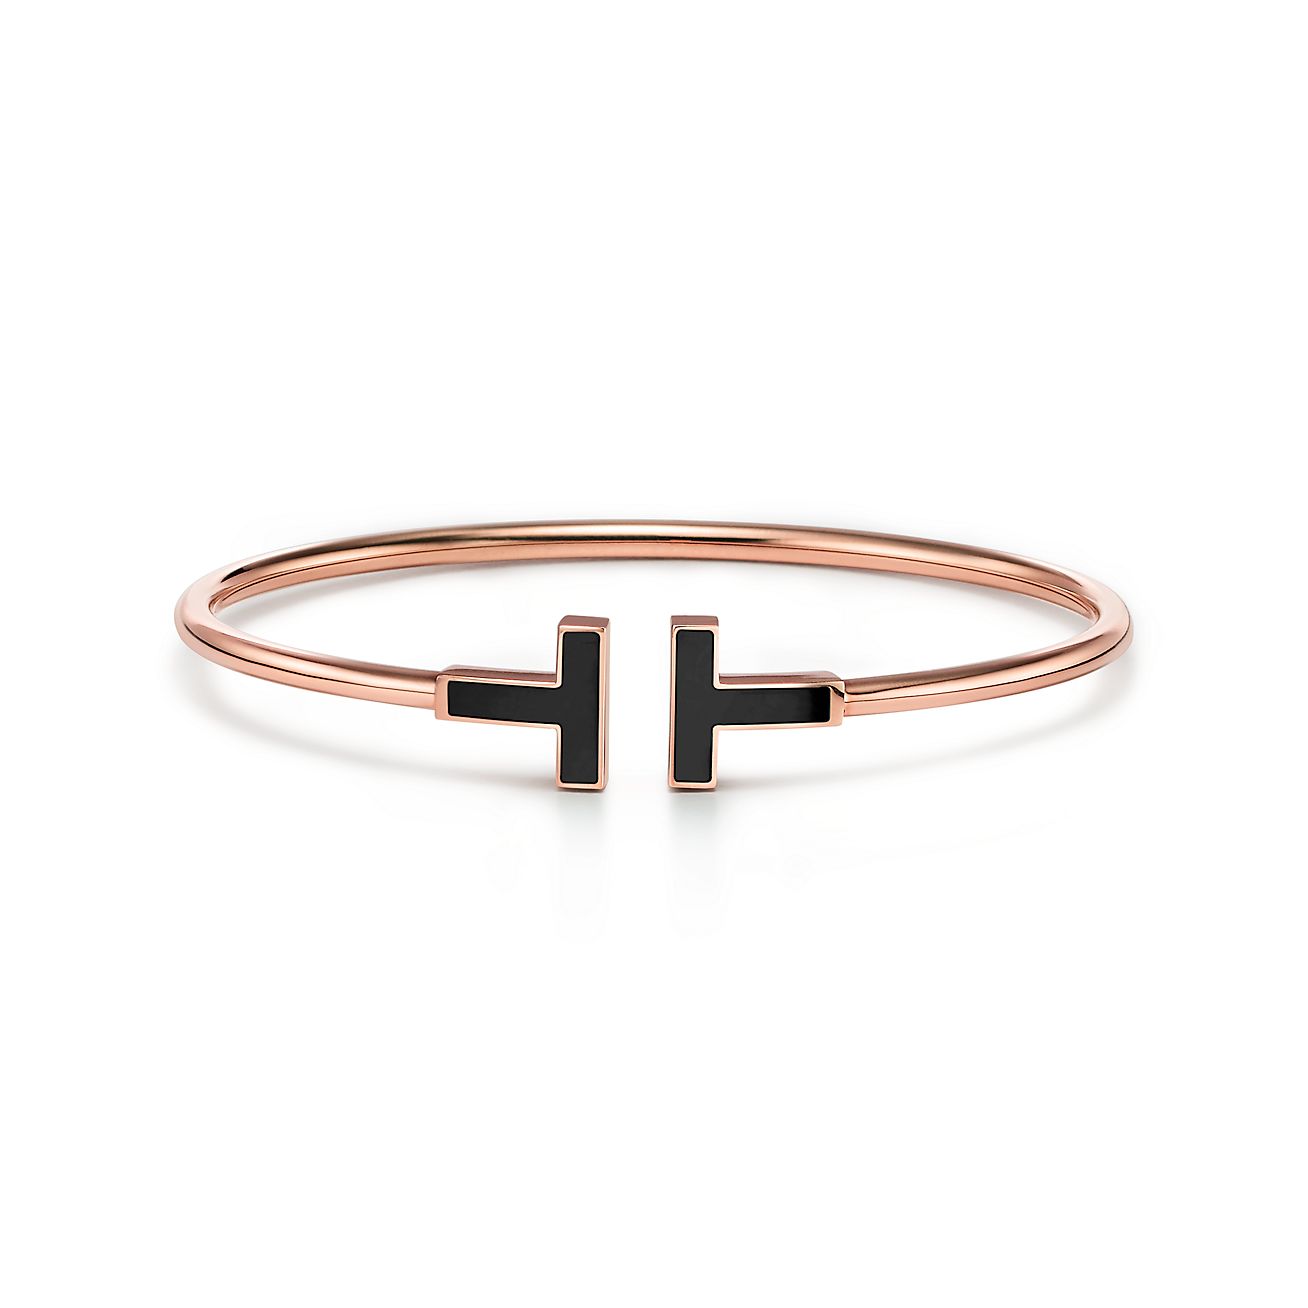 Tiffany T black onyx wire bracelet in 